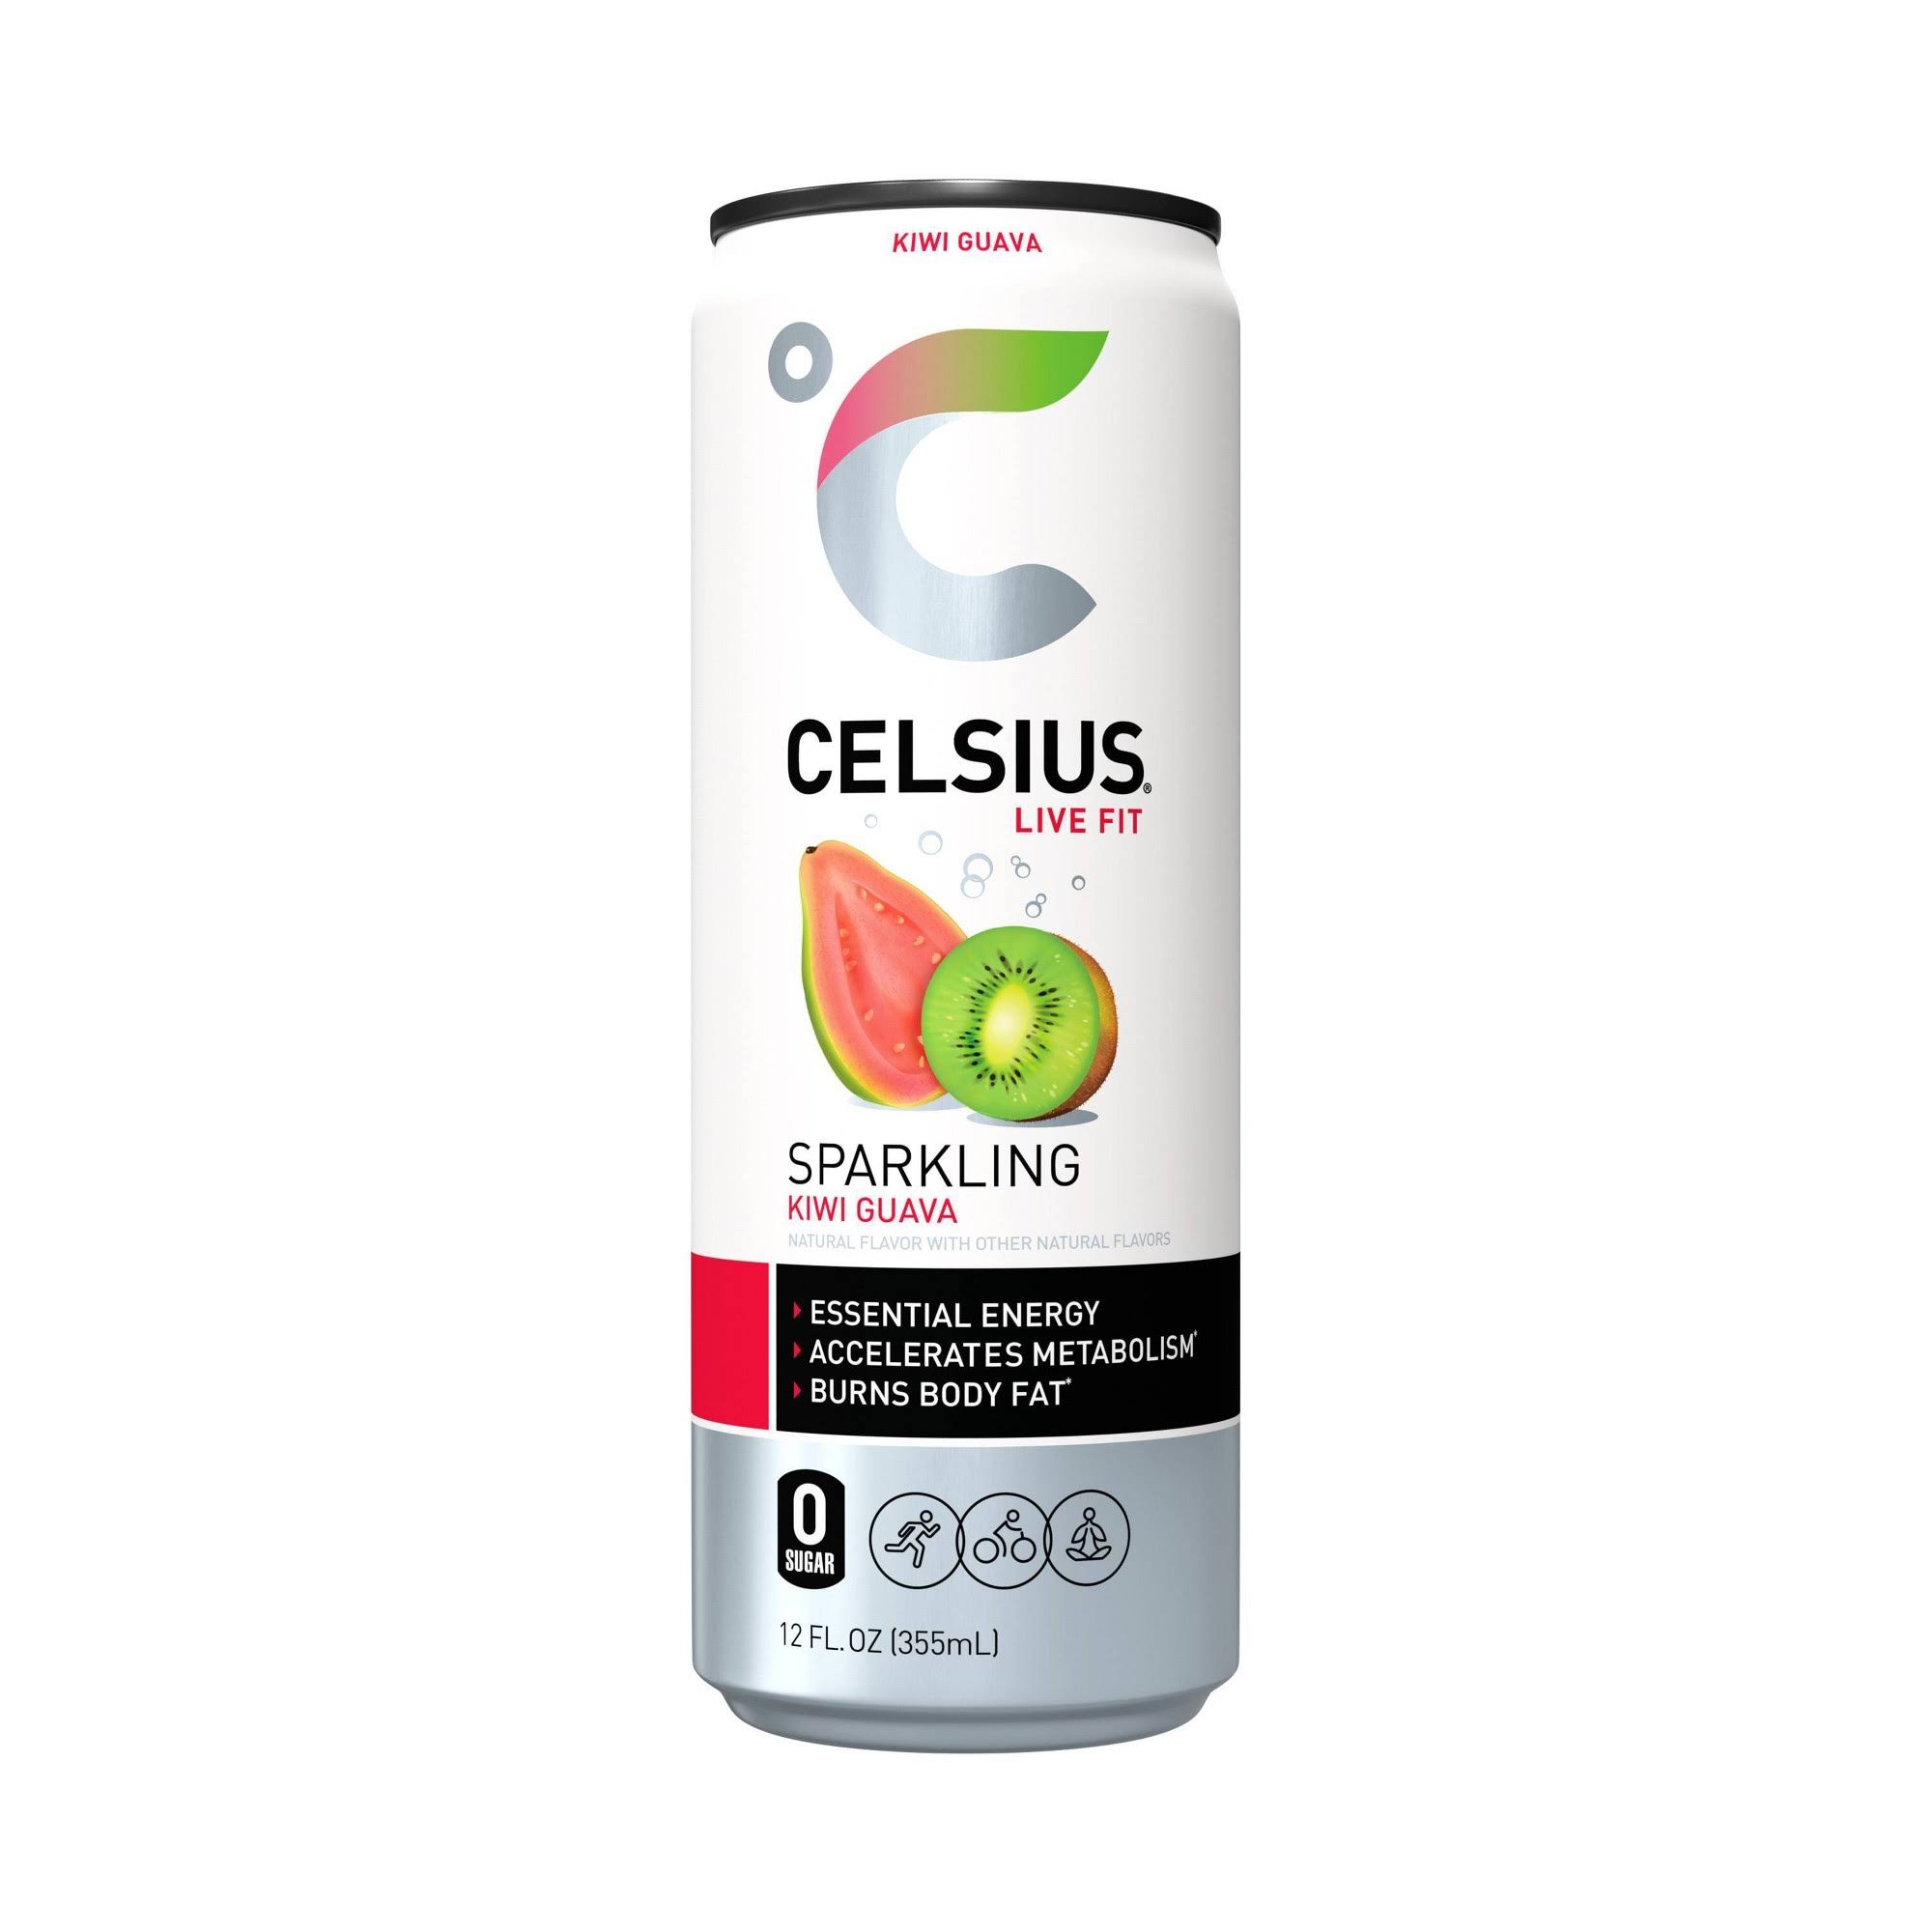 Celsius Zero Sugar Fitness Energy Drink - 12-Pack Sparkling Kiwi Guava 12 oz.